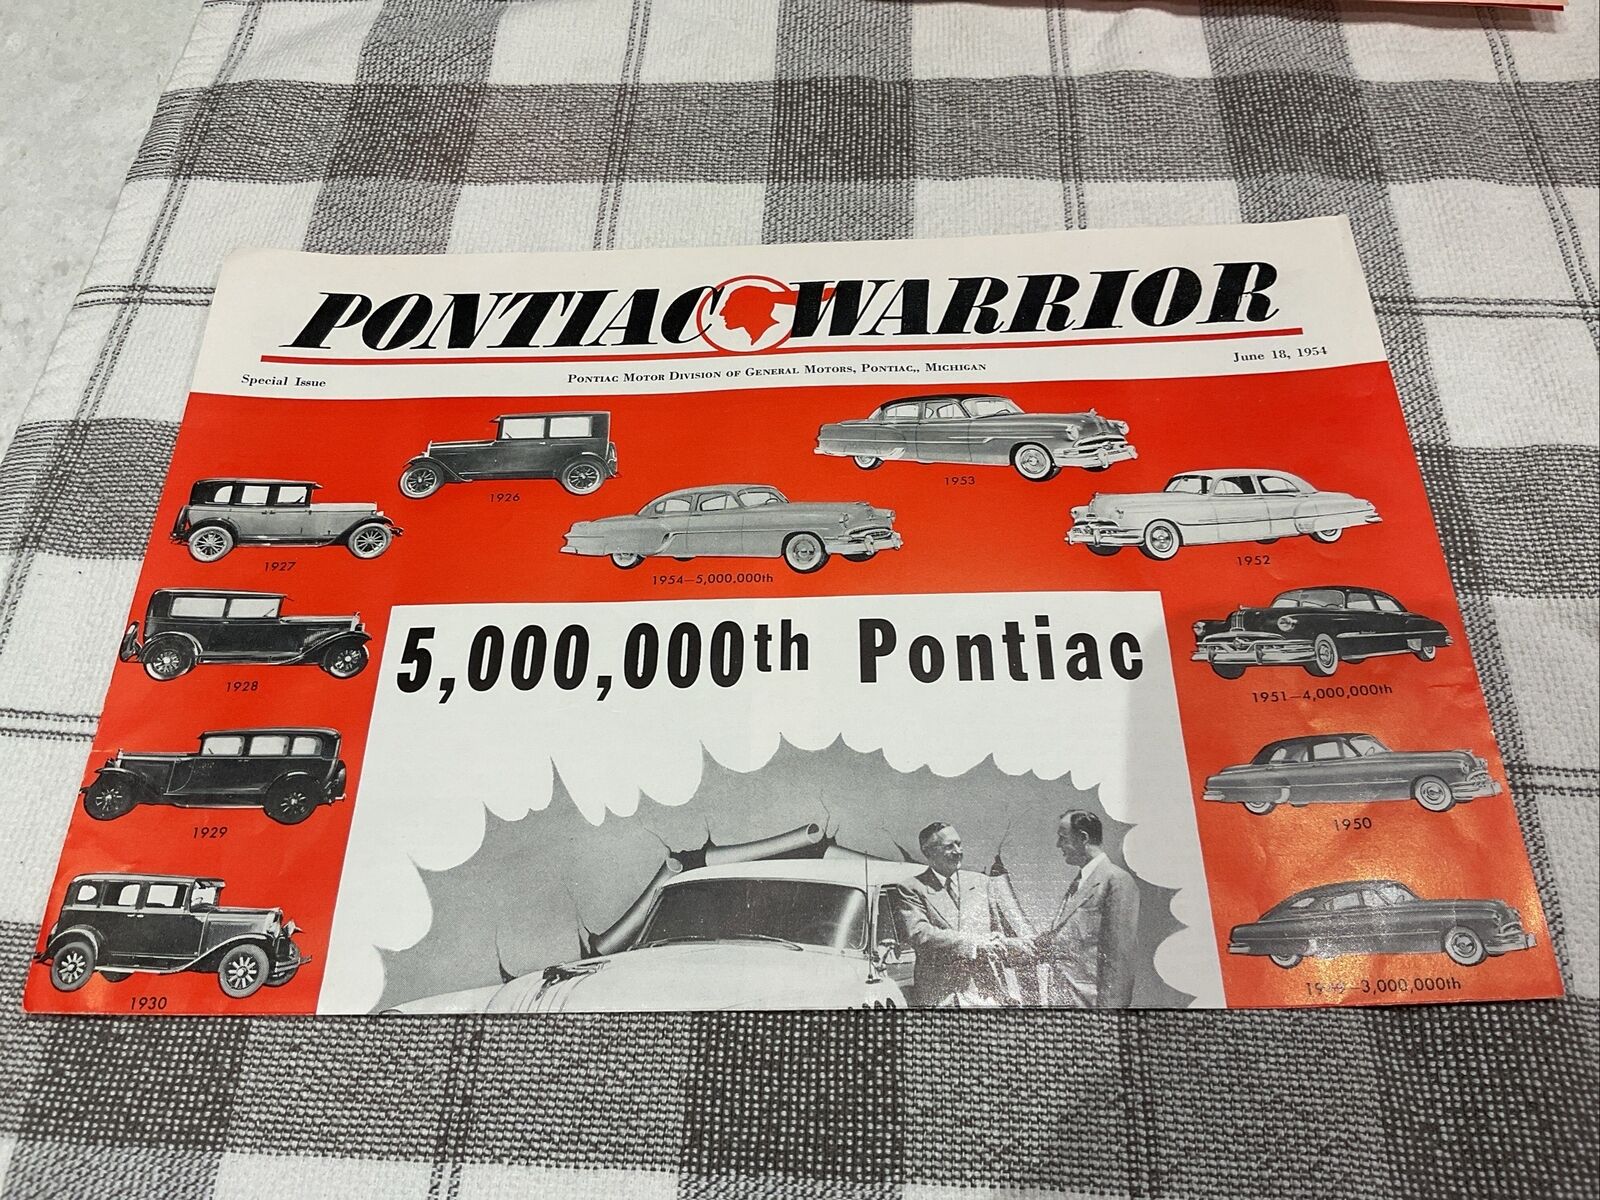 1954 Pontiac Warrior/Motors Brochure Special Issue 5,000,000th Pontiac